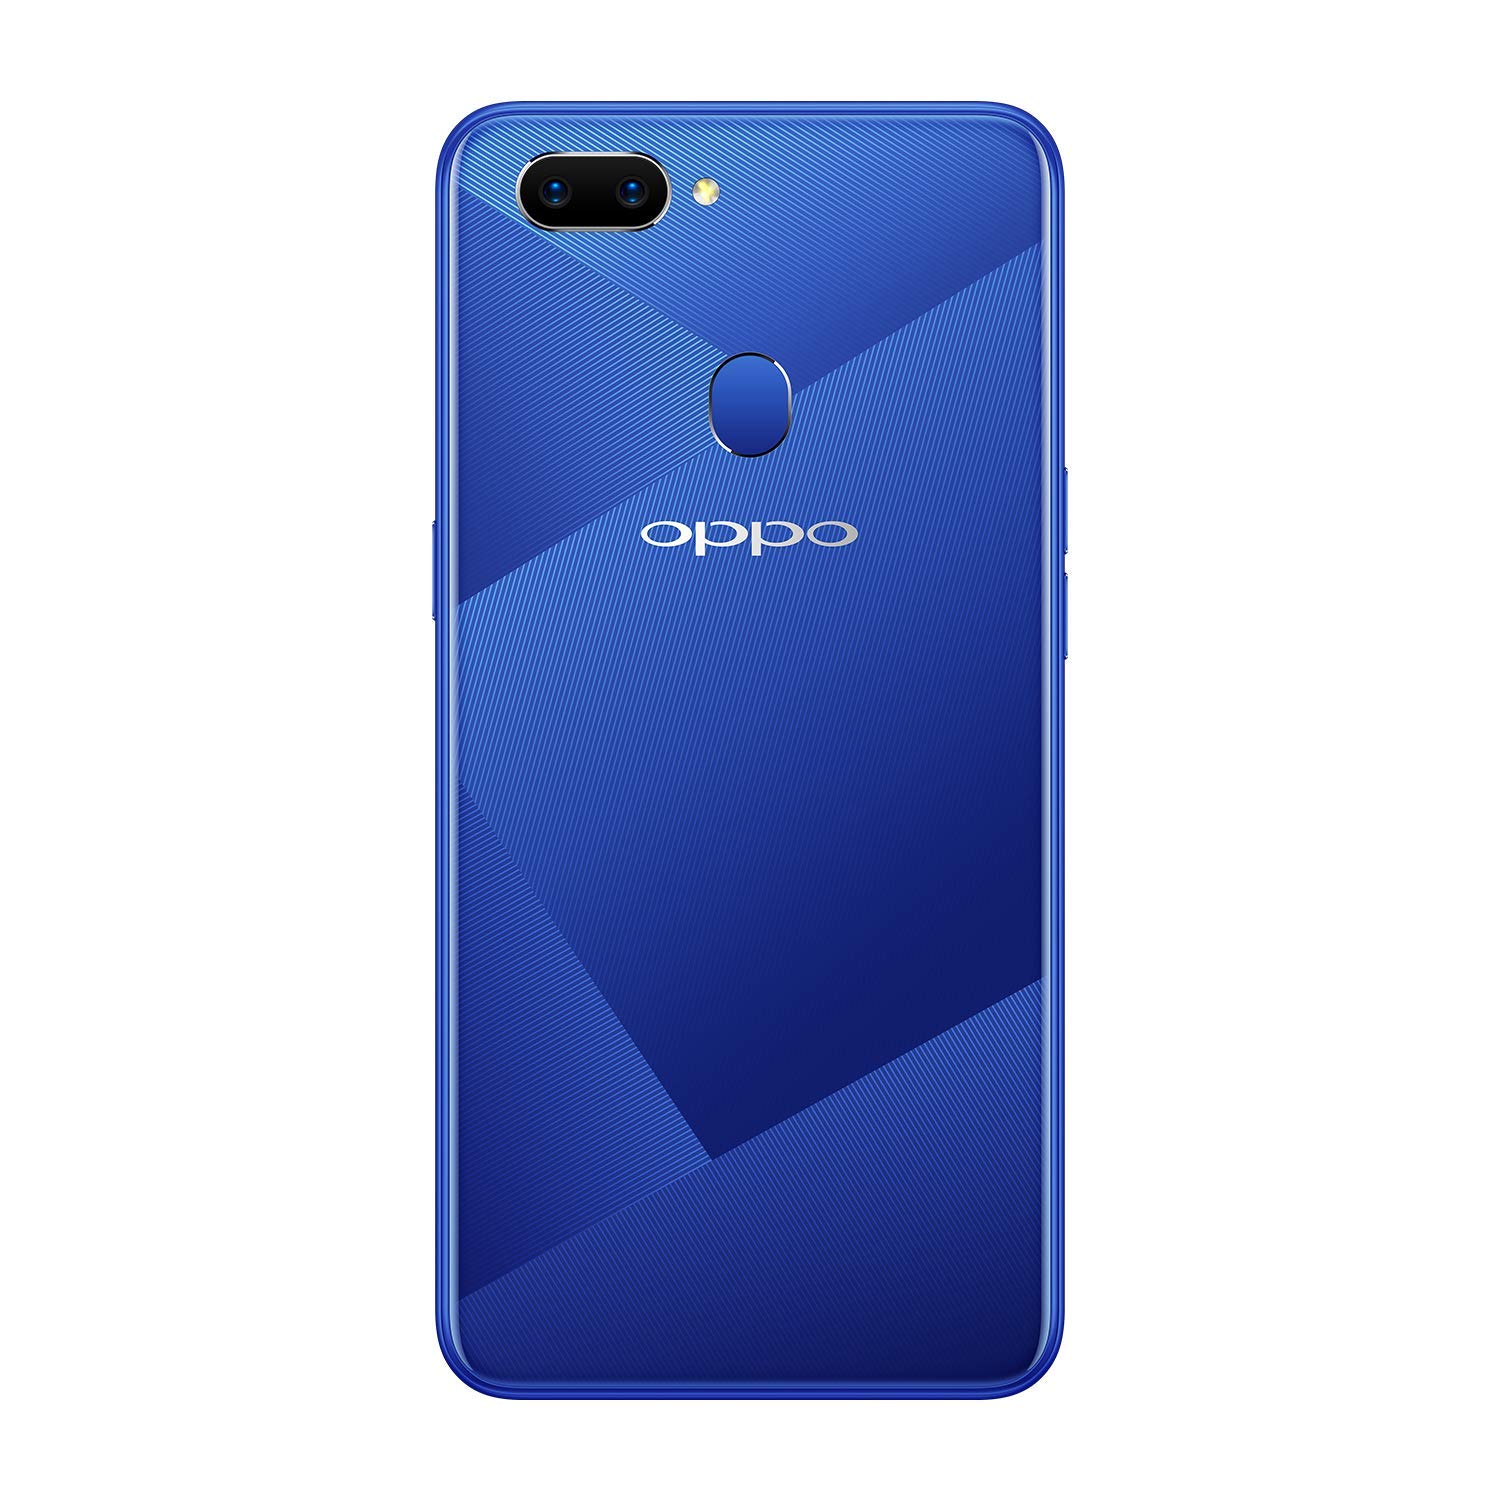 Oppo A5 Price in Bangladesh | MobileMaya